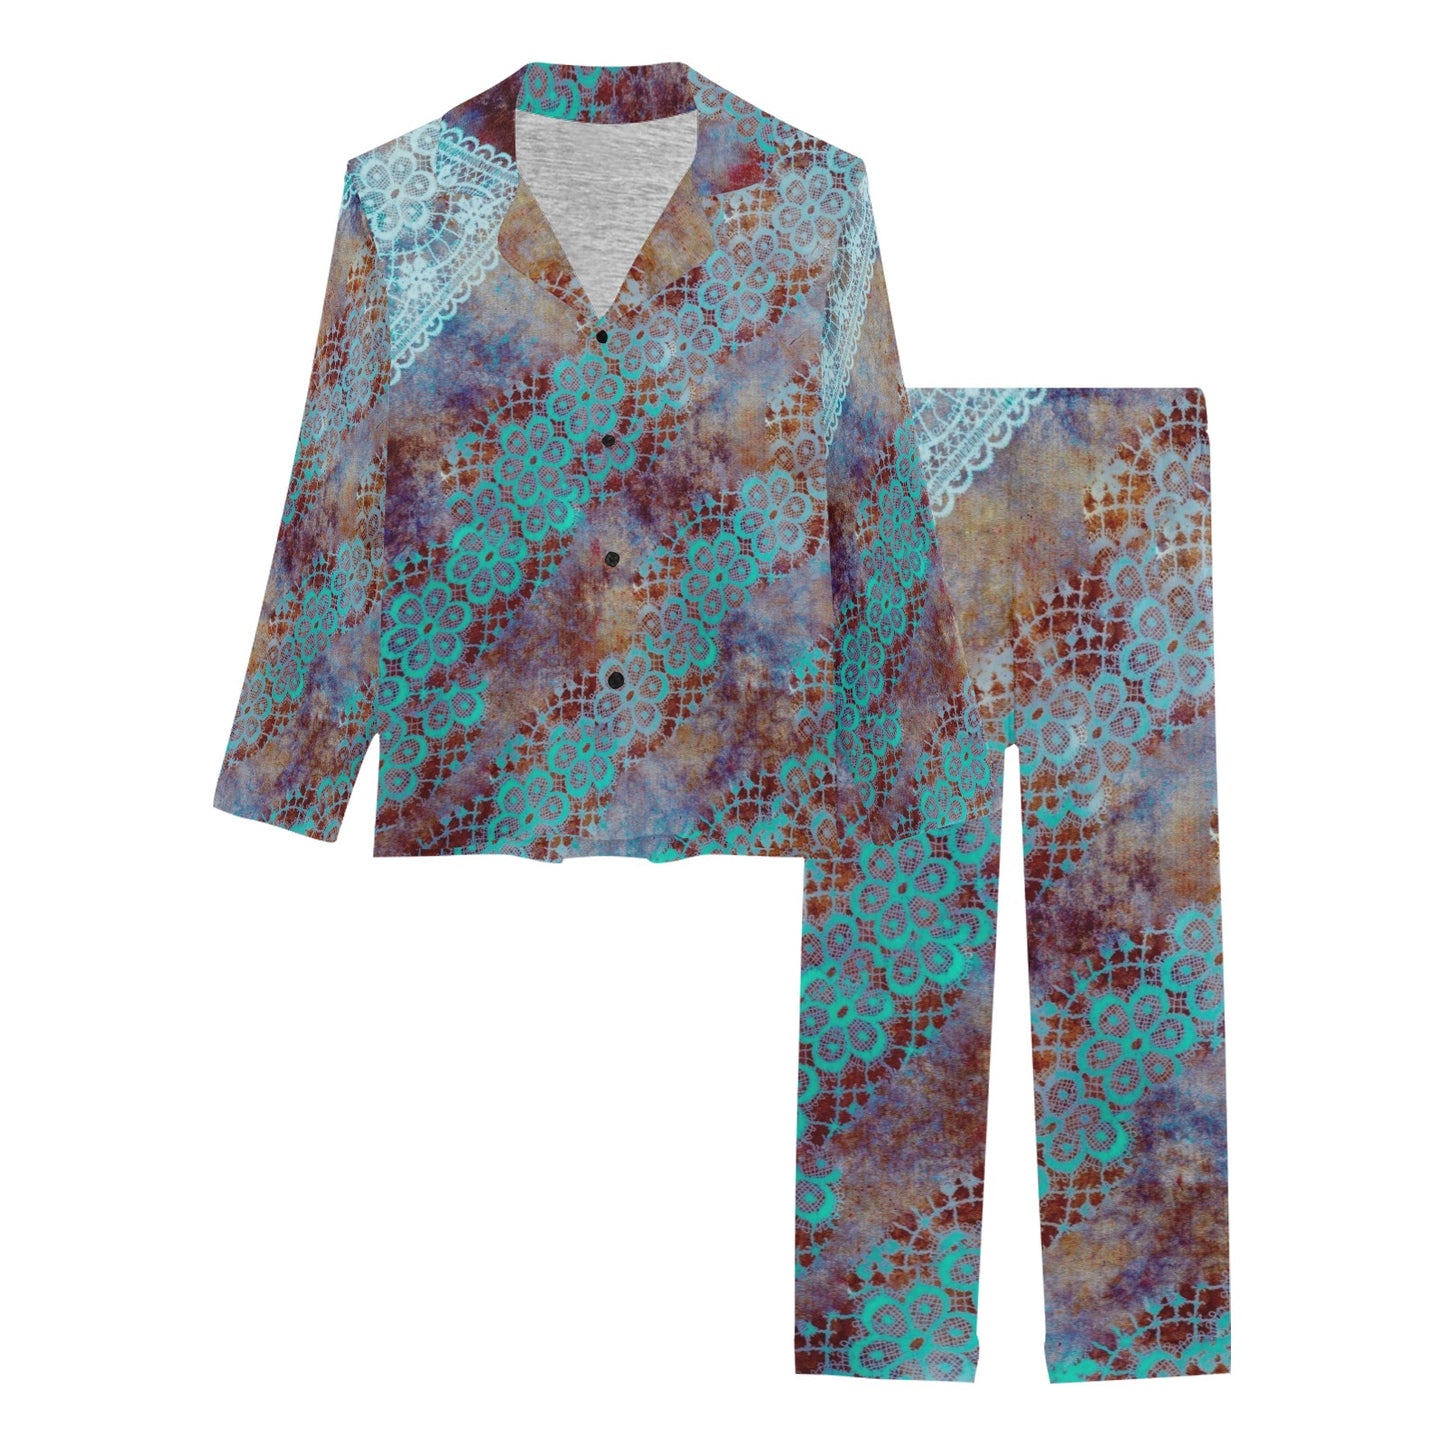 Victorian printed lace pajama set, design 37 Women's Long Pajama Set (Sets 02)